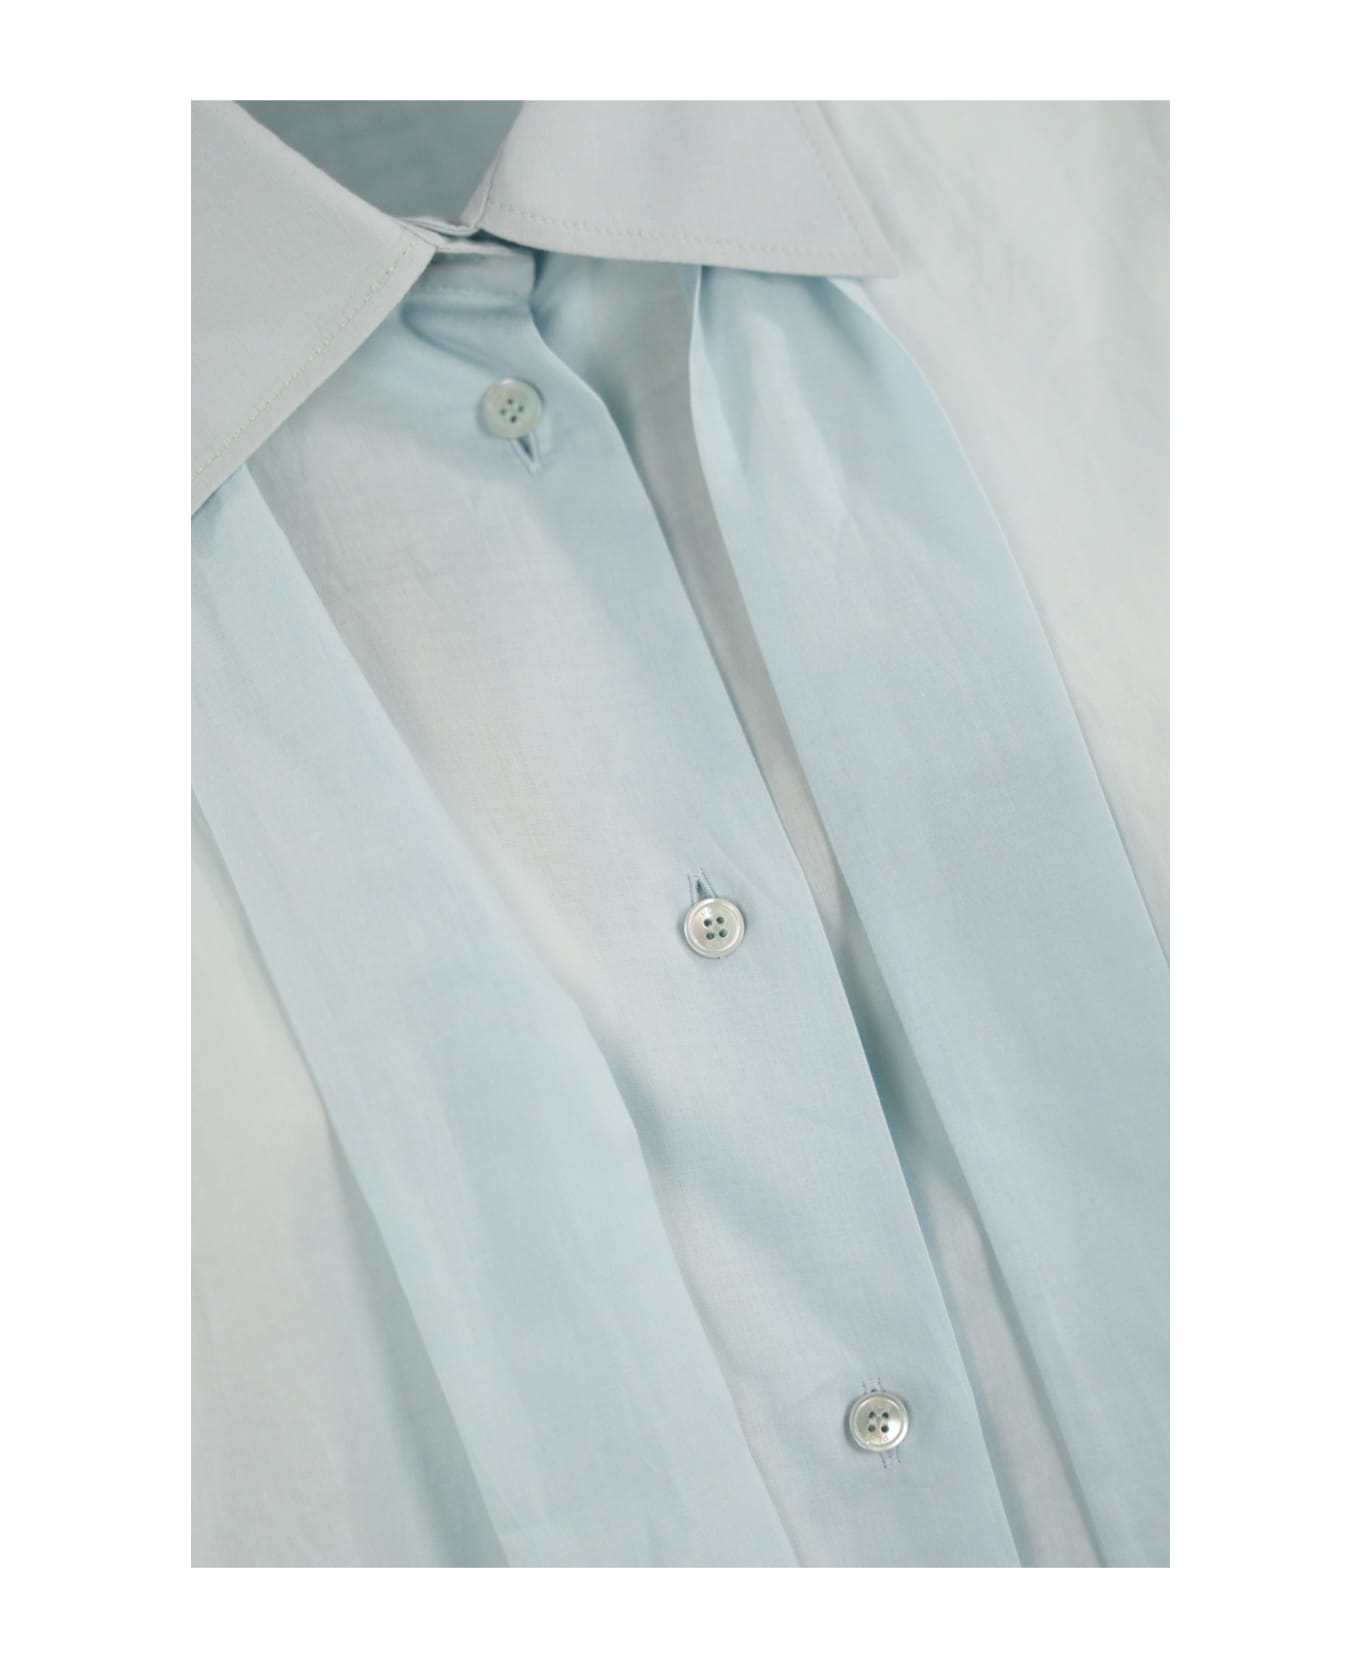 Philosophy di Lorenzo Serafini Cropped Cotton Shirt - Azzurro